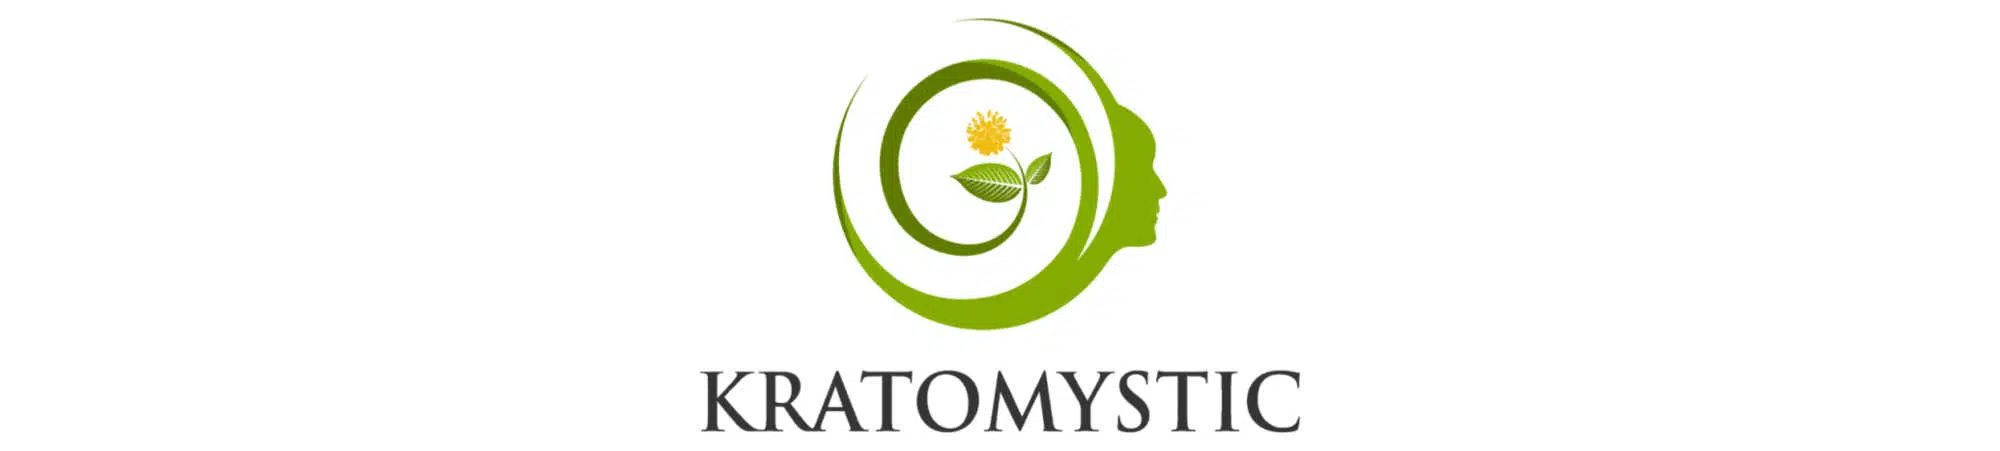 image of kratomystic logo